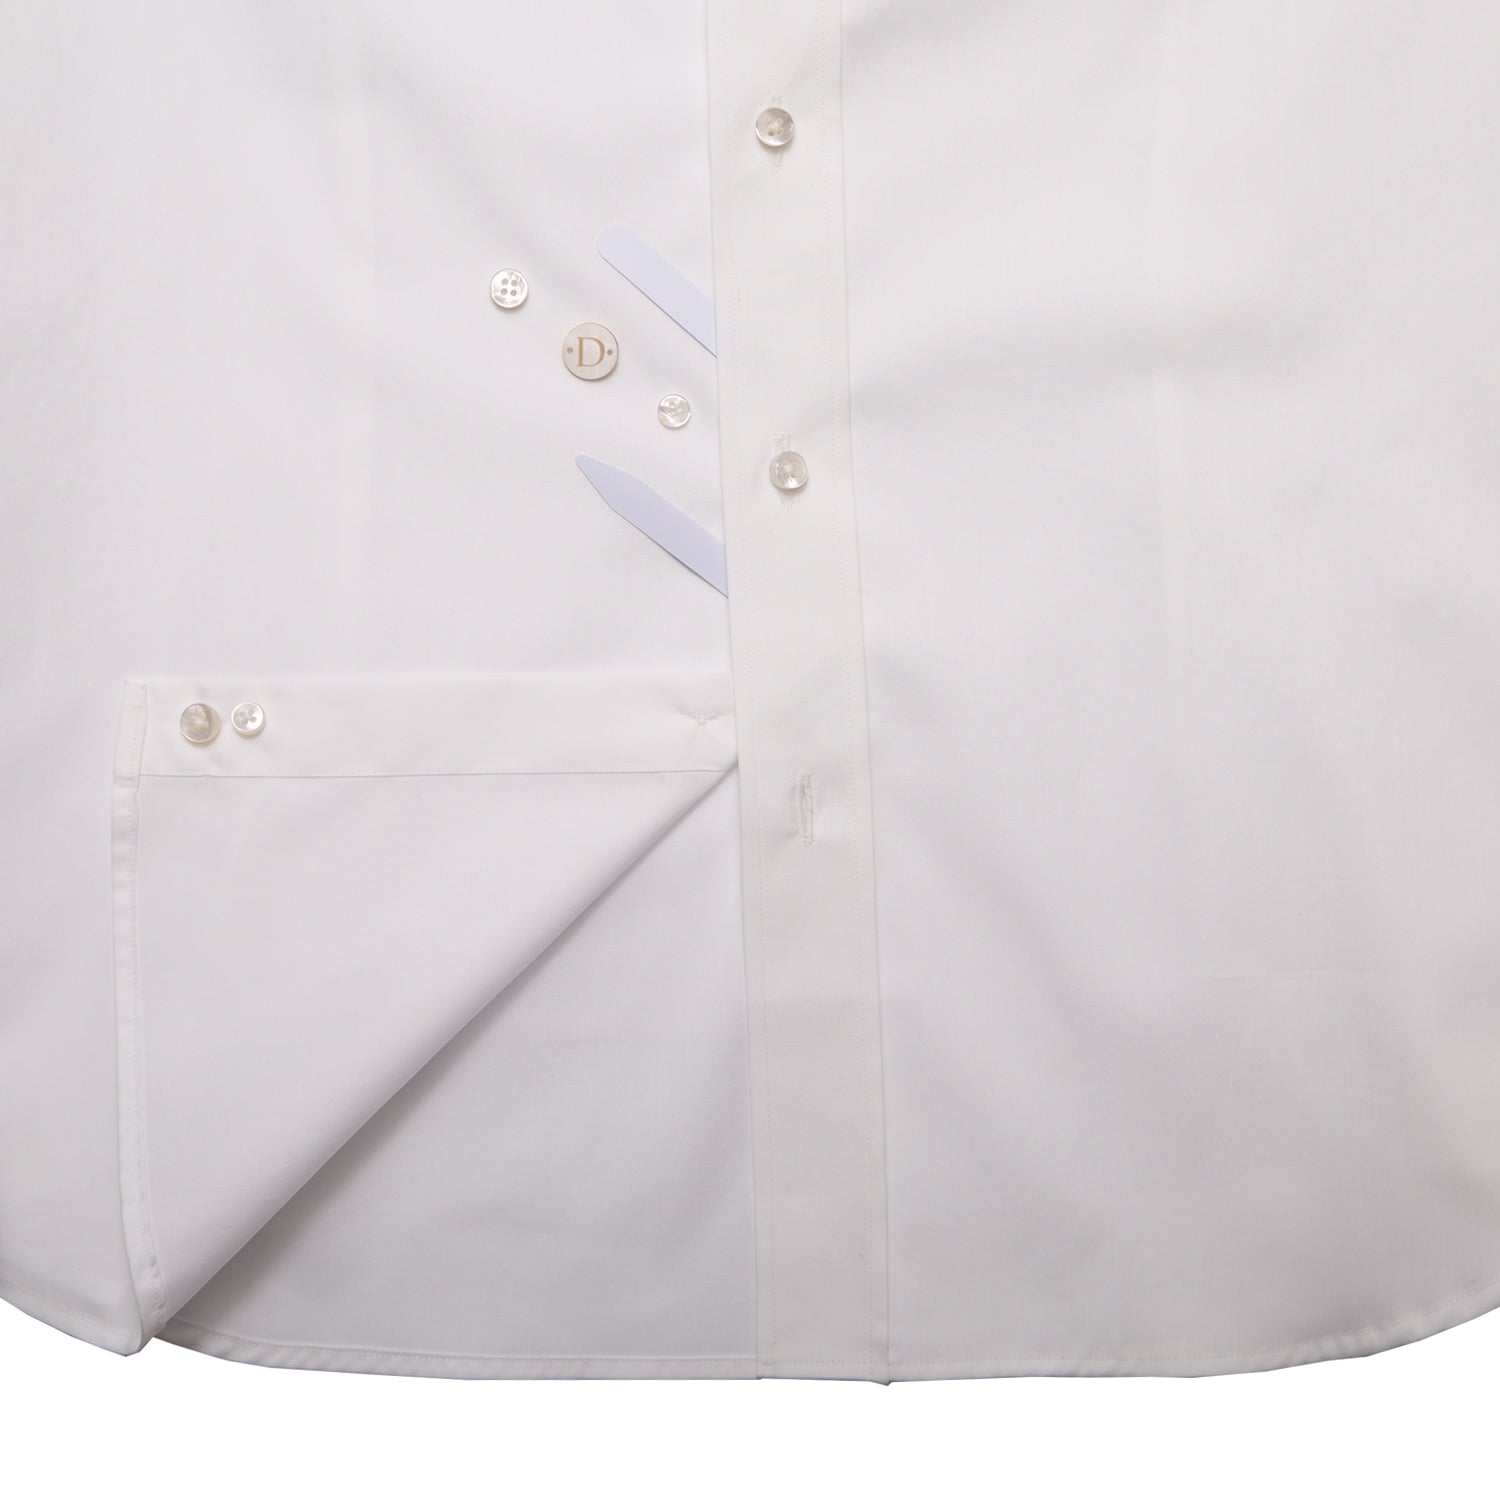 DARIO’S Couture Men’s Shirt München Mixed cuff in 330/2, White